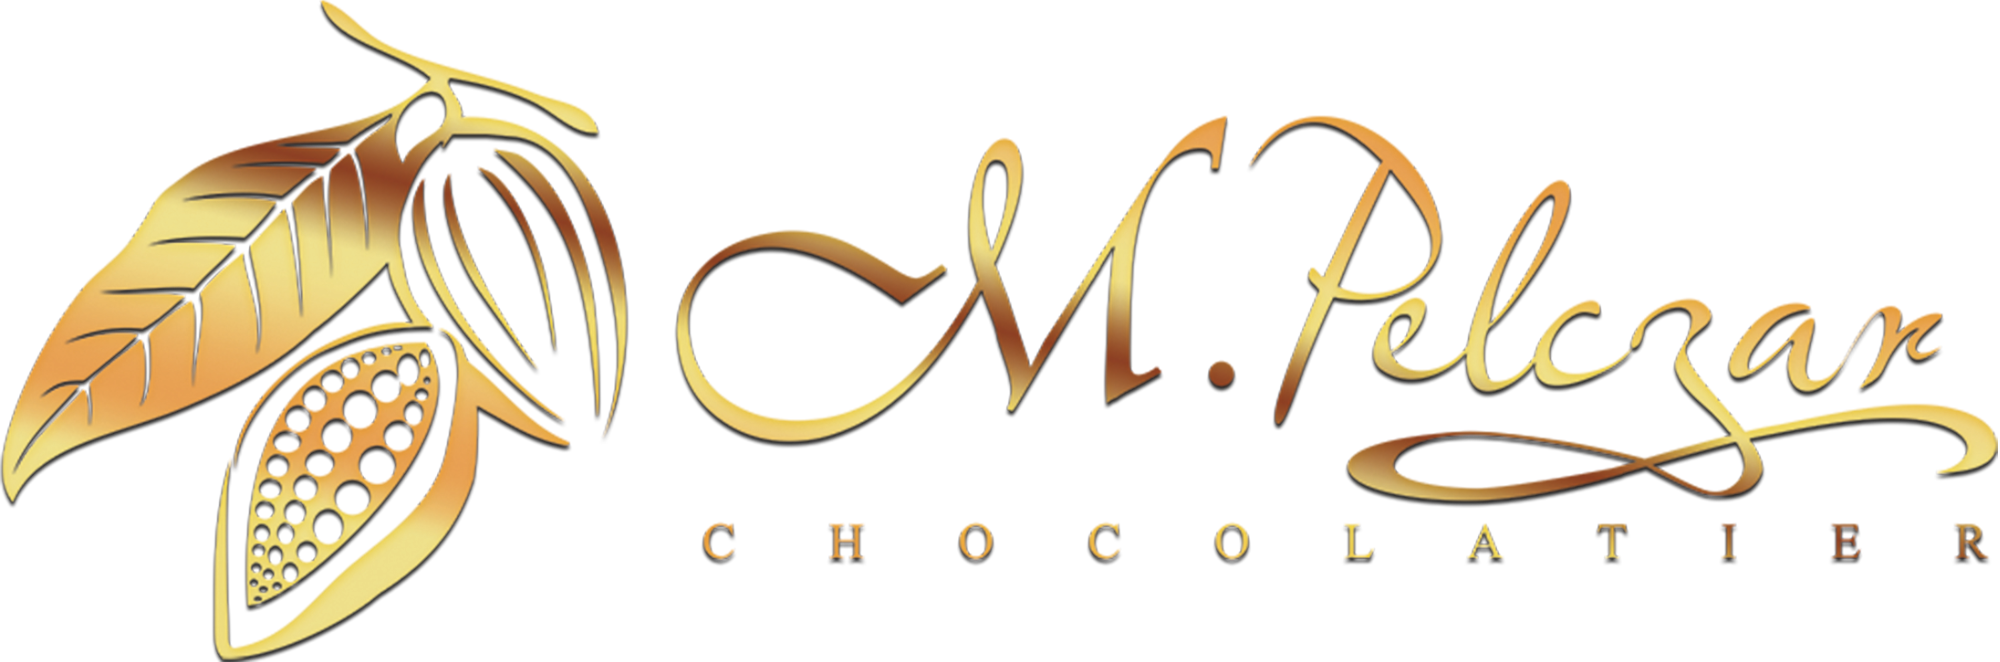 CHOCOLATE FACTORY